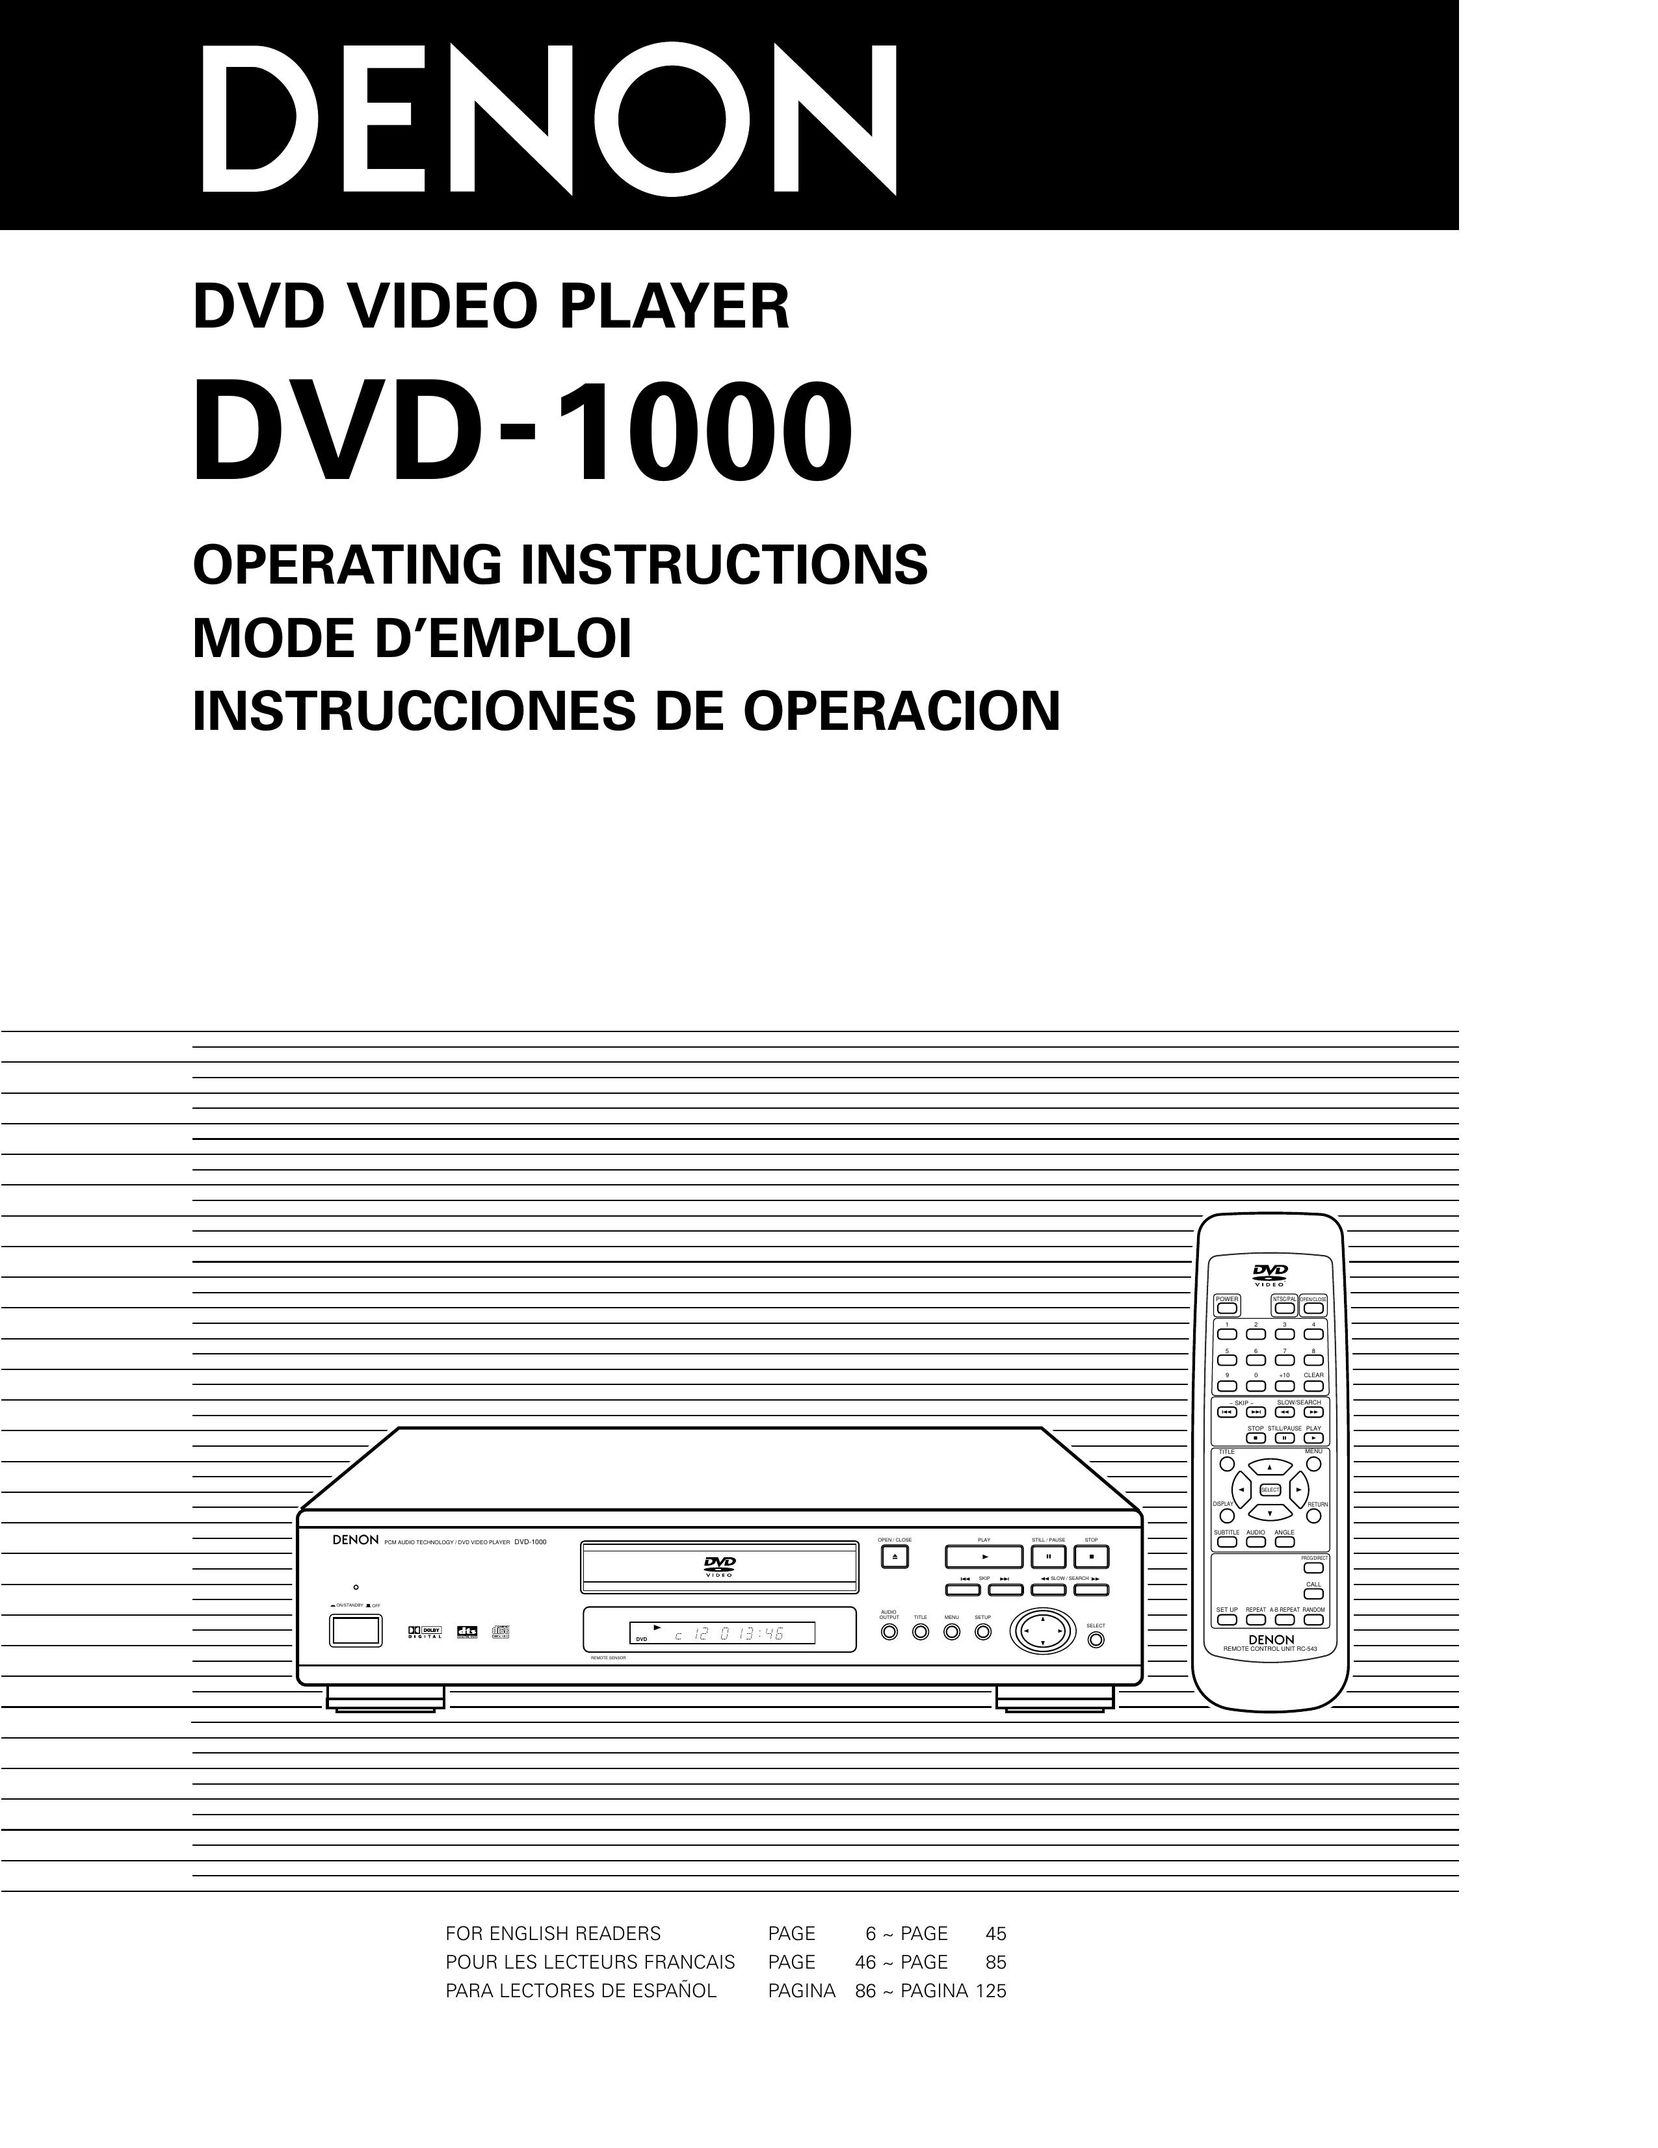 Denon DVD-1000 DVD Player User Manual